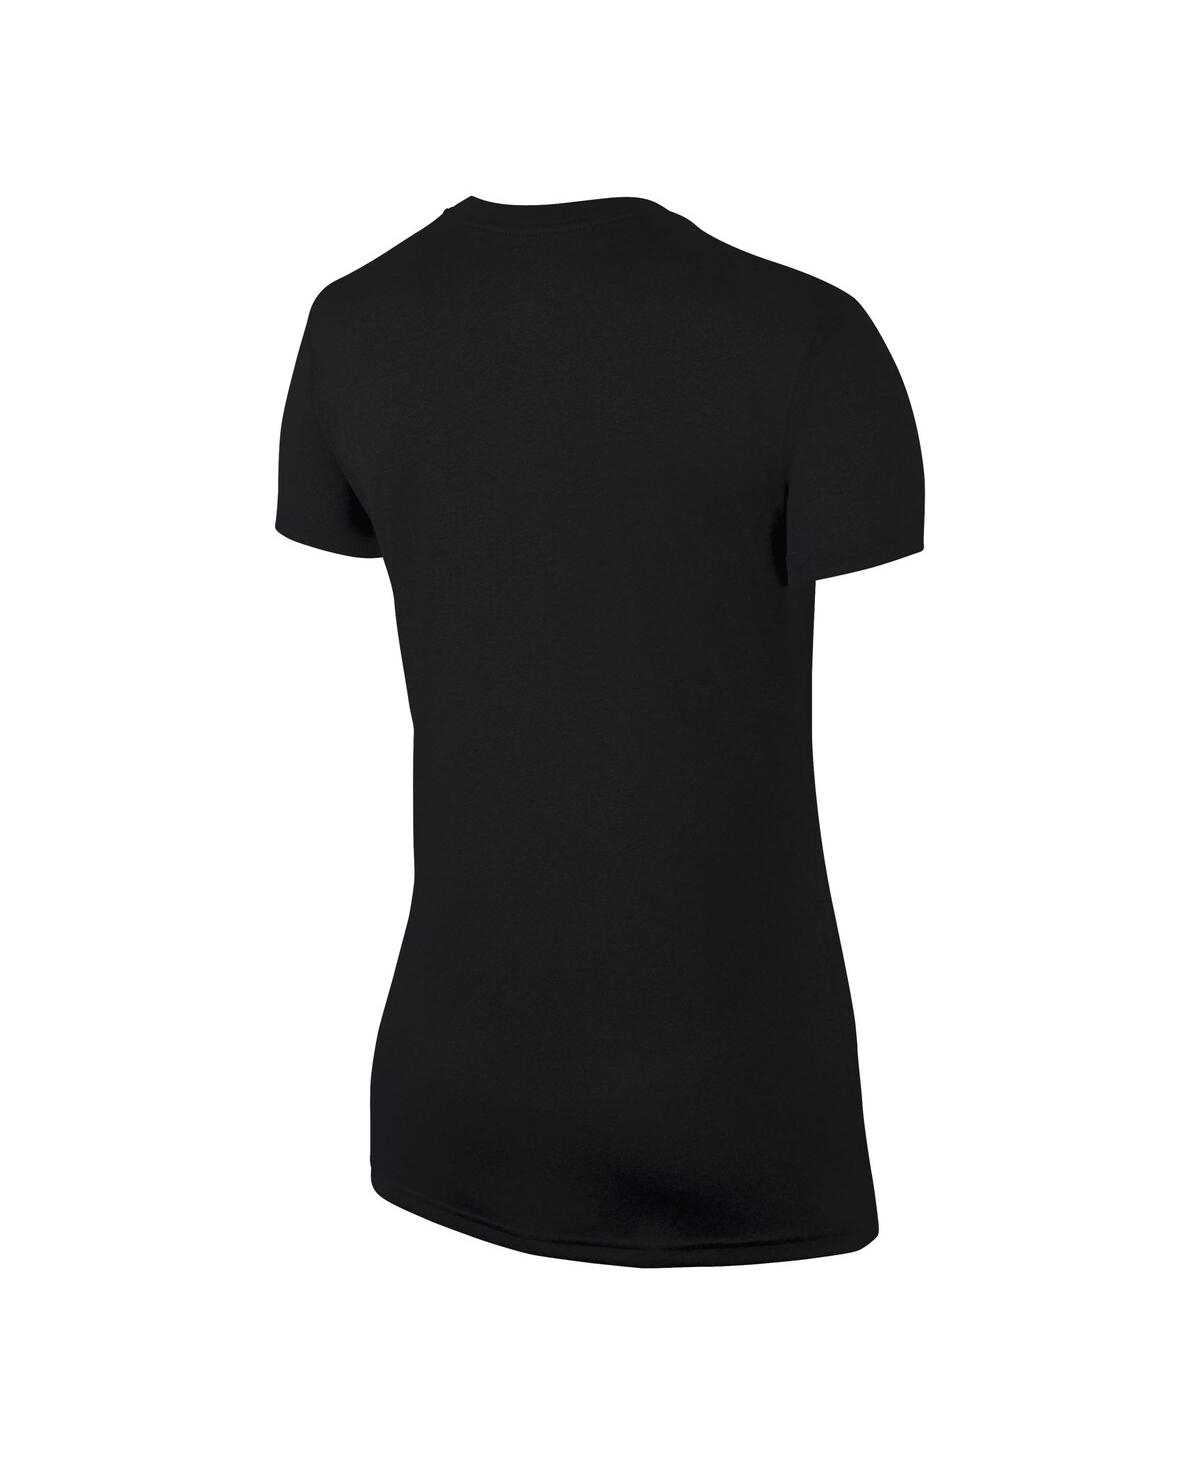 Shop Nike Women's  Black 2022 Wnba All-star Game Logo Legend Performance T-shirt